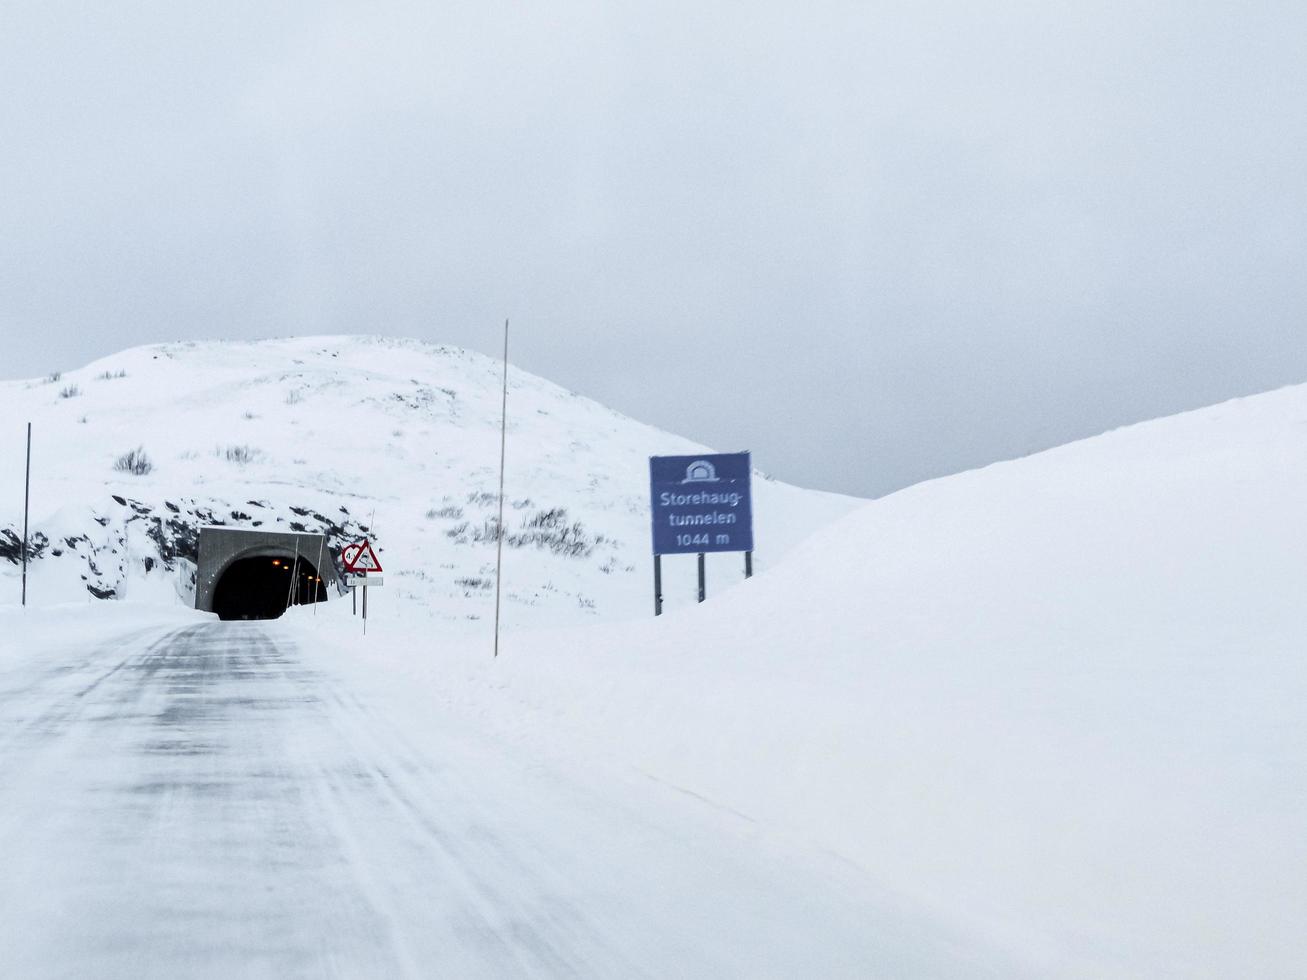 Storehaugtunnelen in Vik, Vestland, Norway. Snow-covered landscape roads. photo